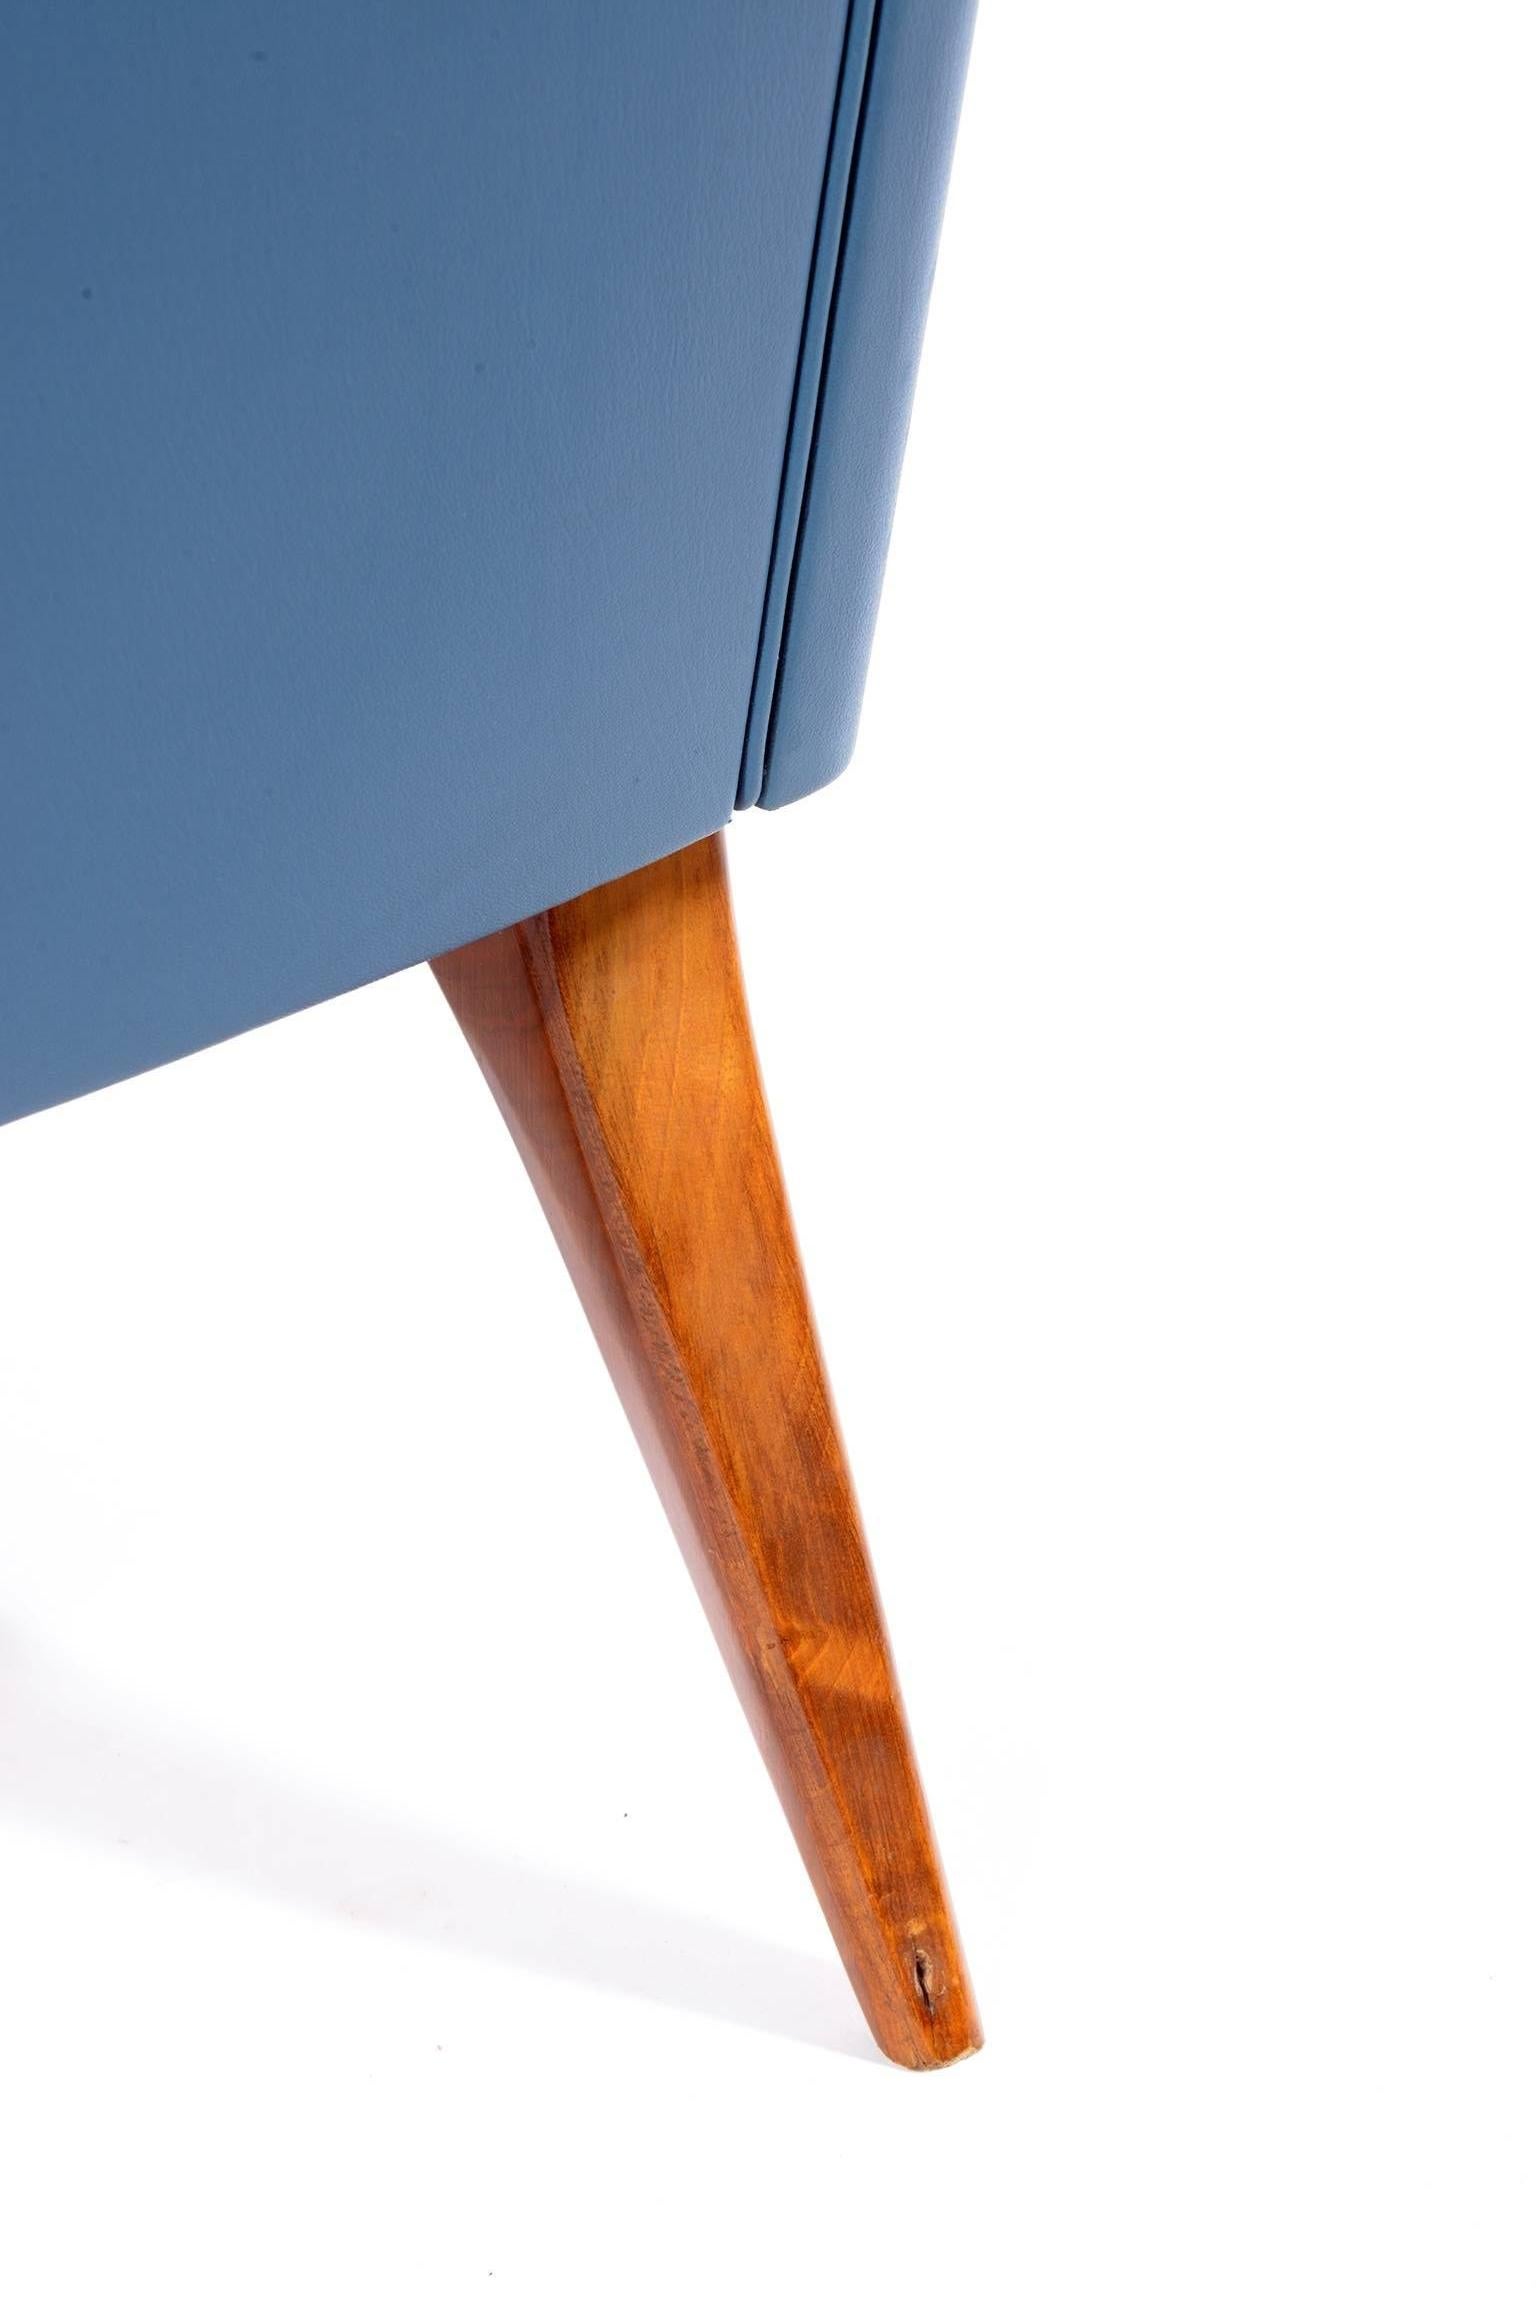 Castelli Signed Midcentury Pair of Armchairs Original Orange-Bleu Upholstery For Sale 1